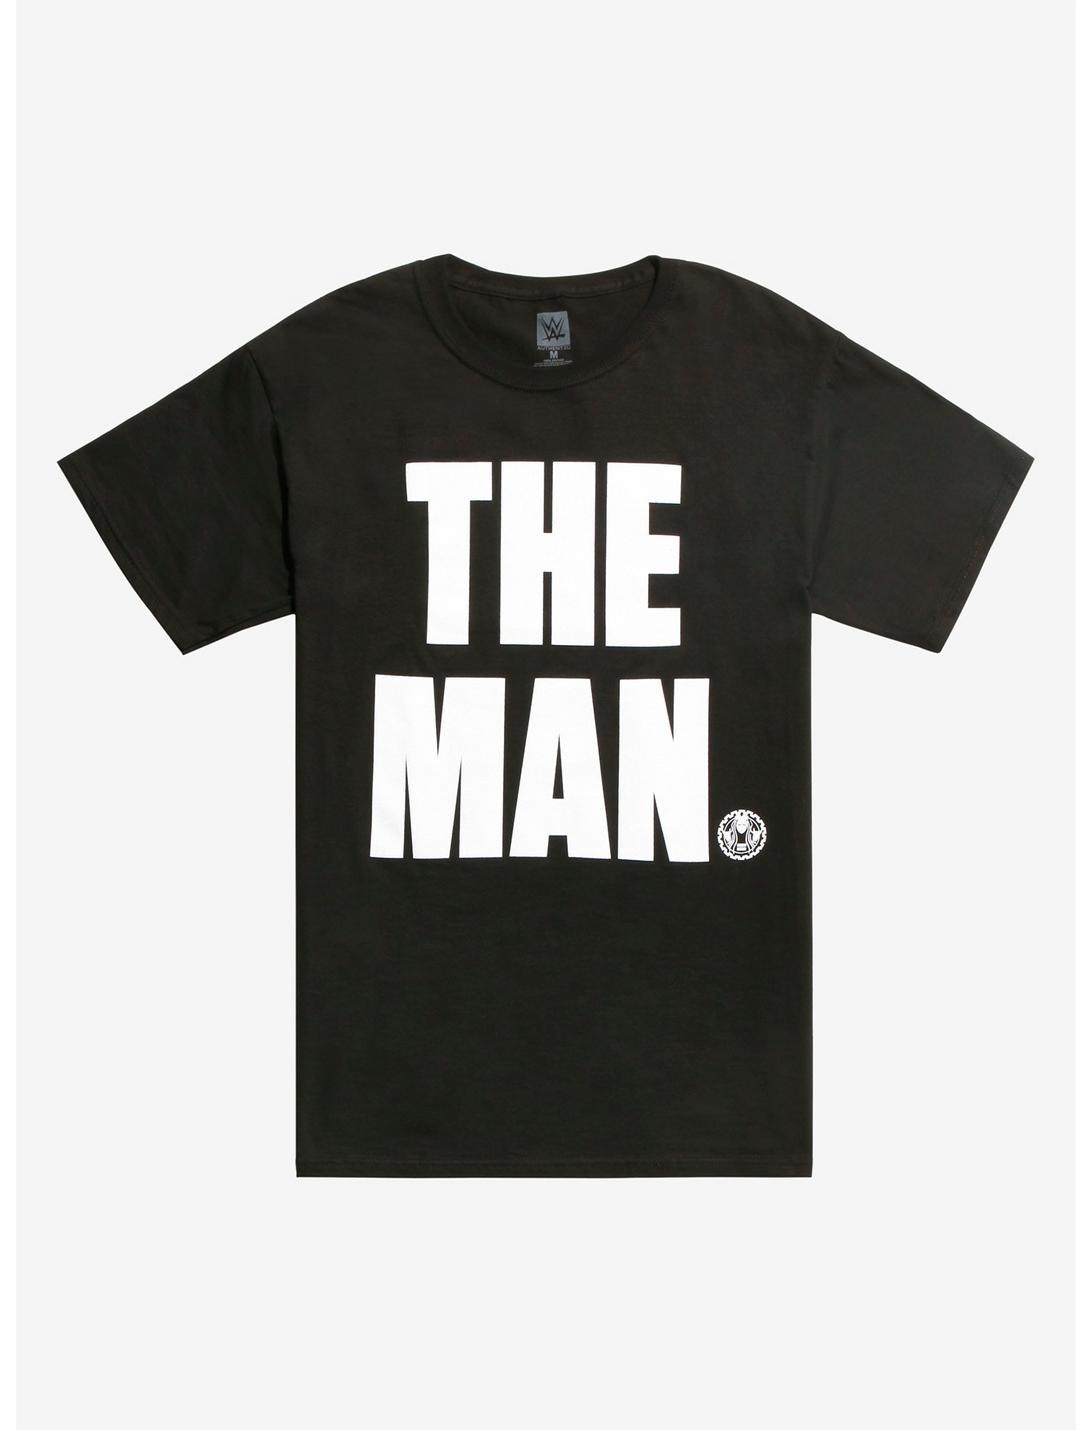 Becky Lynch "The Man" Youth T-Shirt 